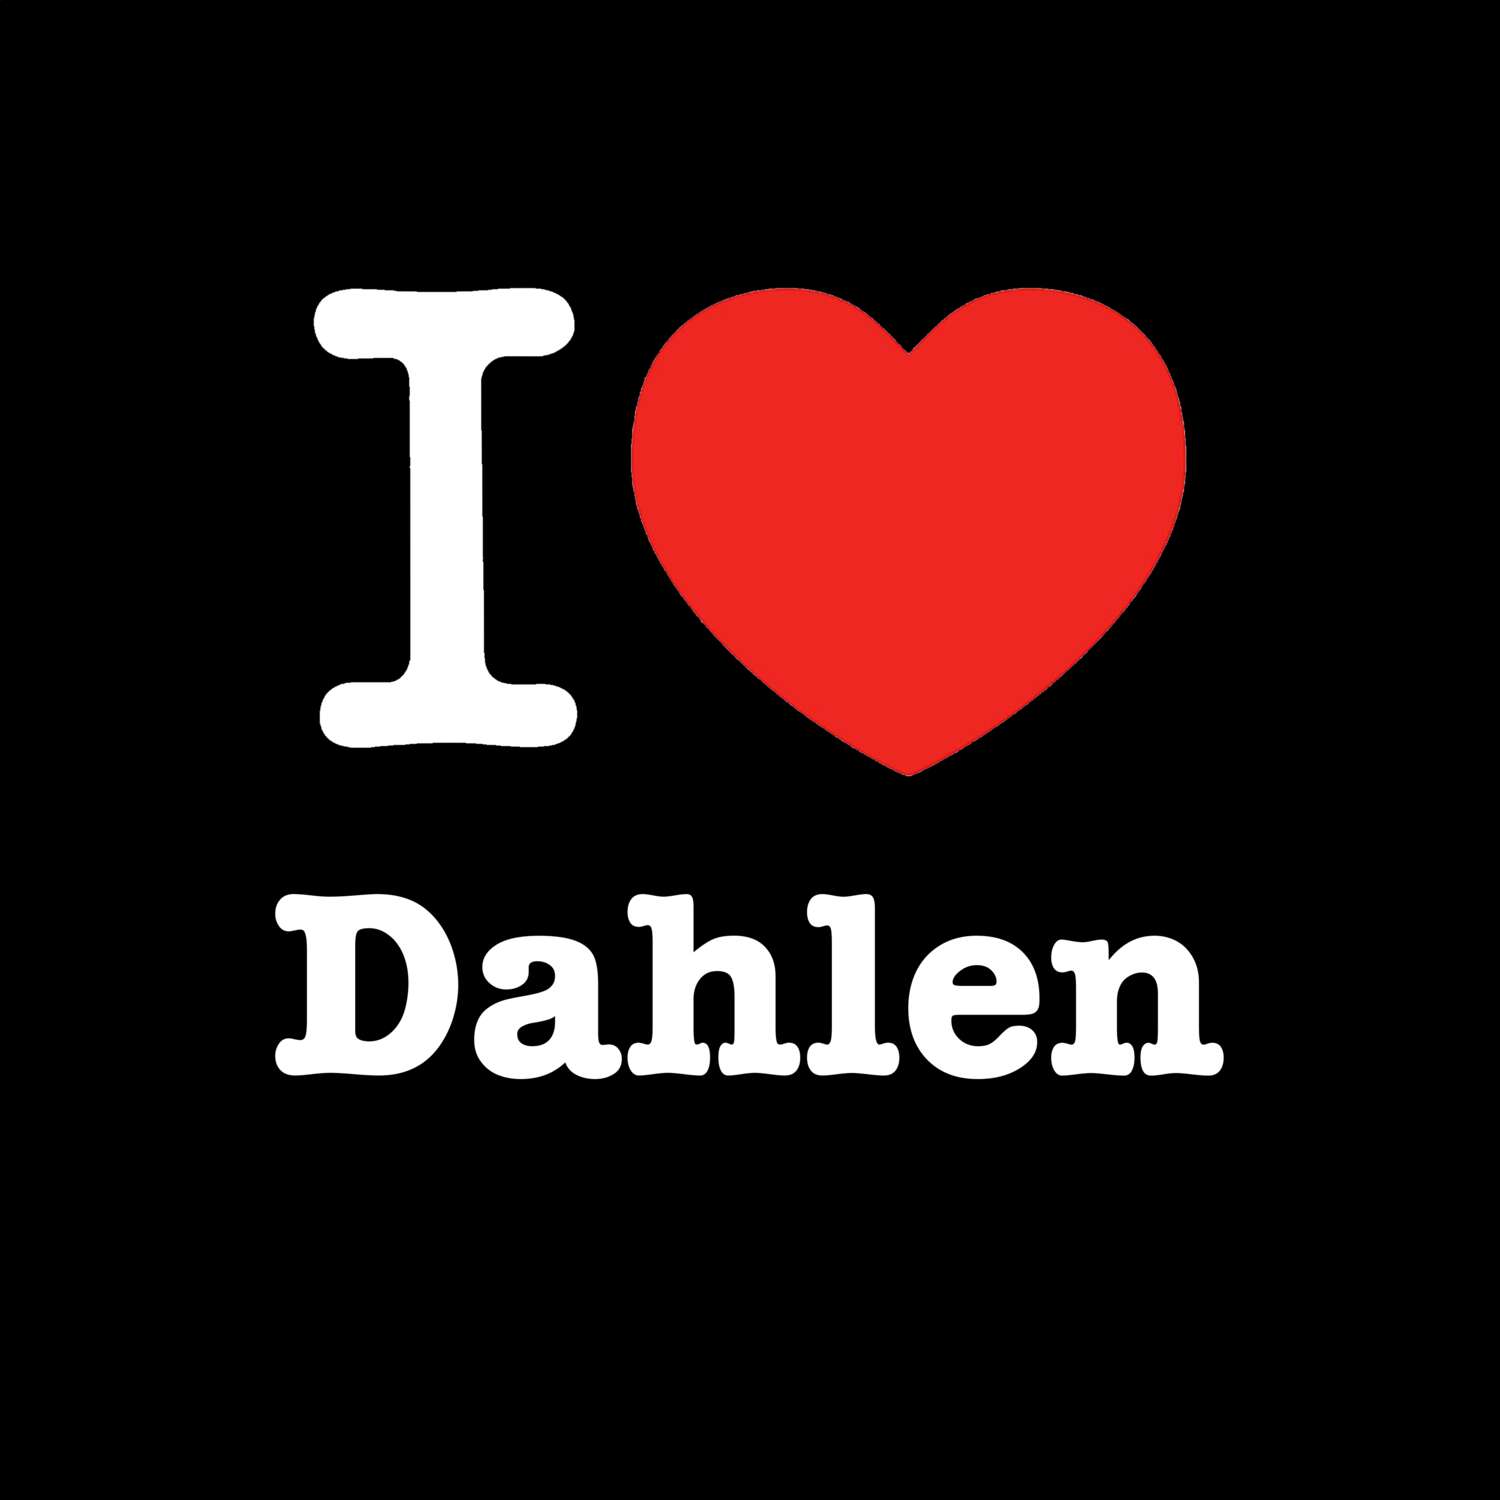 Dahlen T-Shirt »I love«